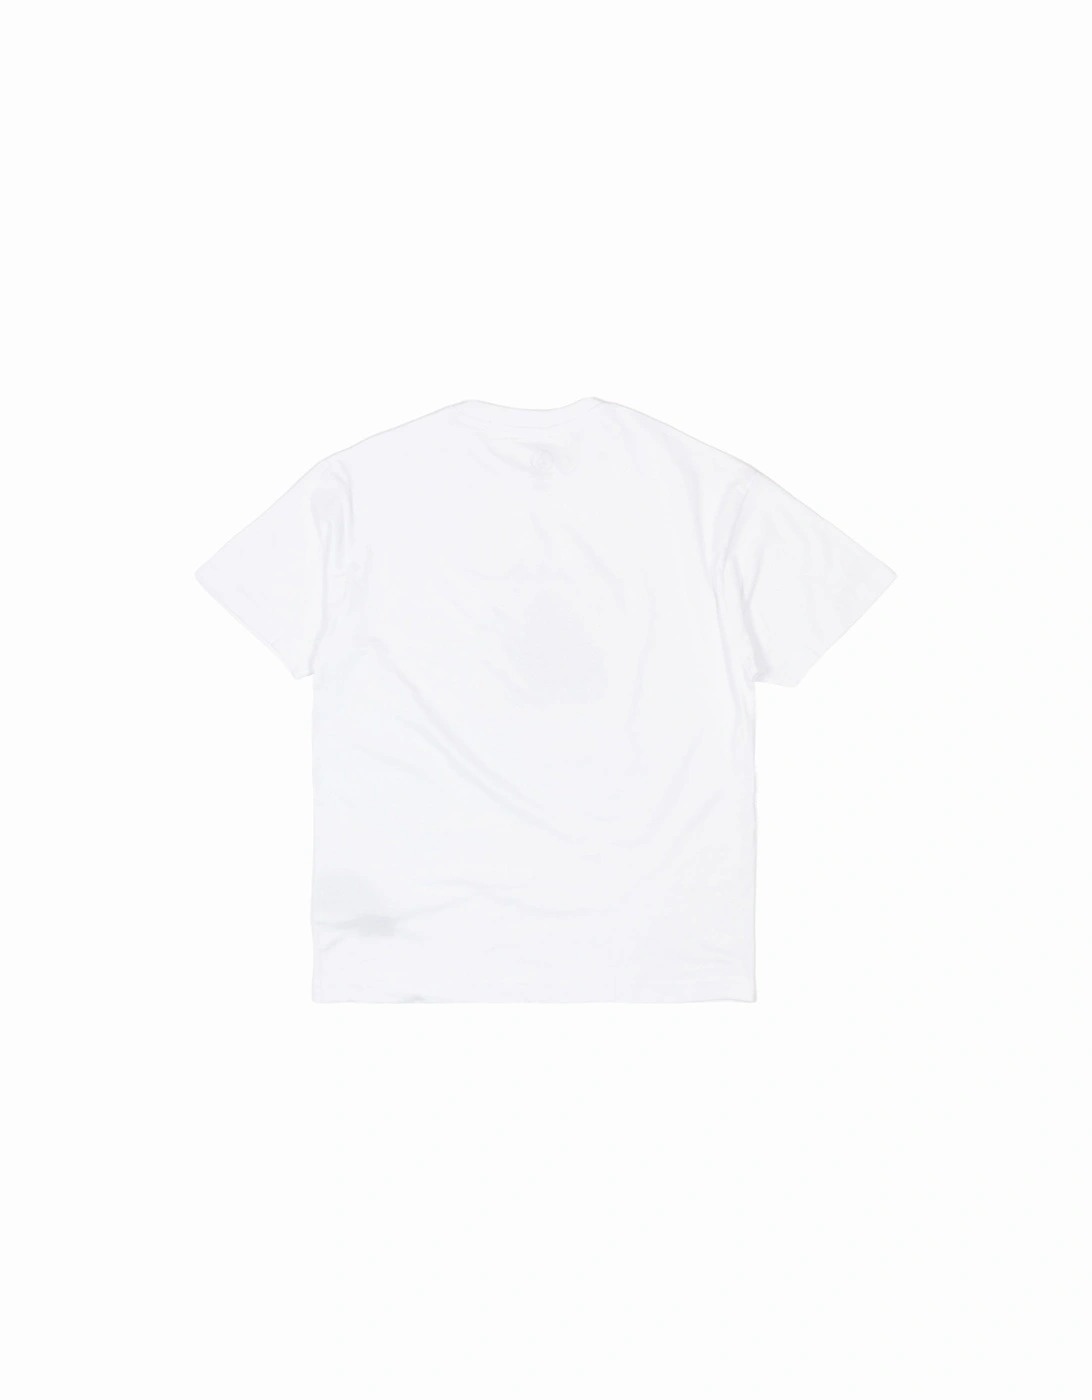 Thundertaker T-Shirt - White